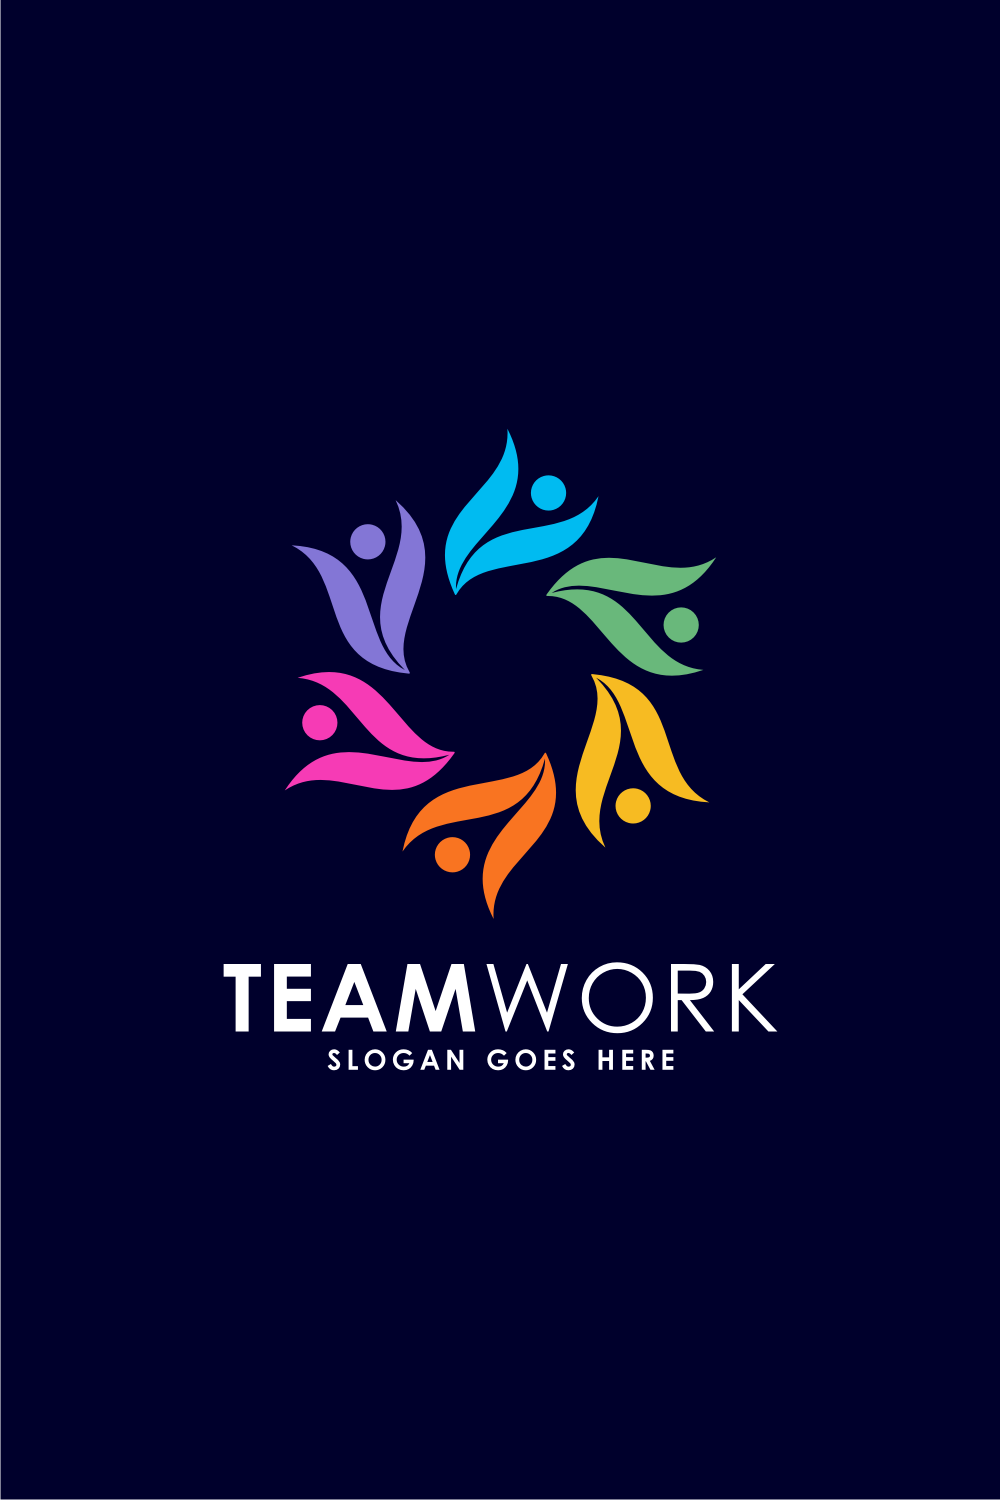 Teamwork People Community Logo Design pinterest image.